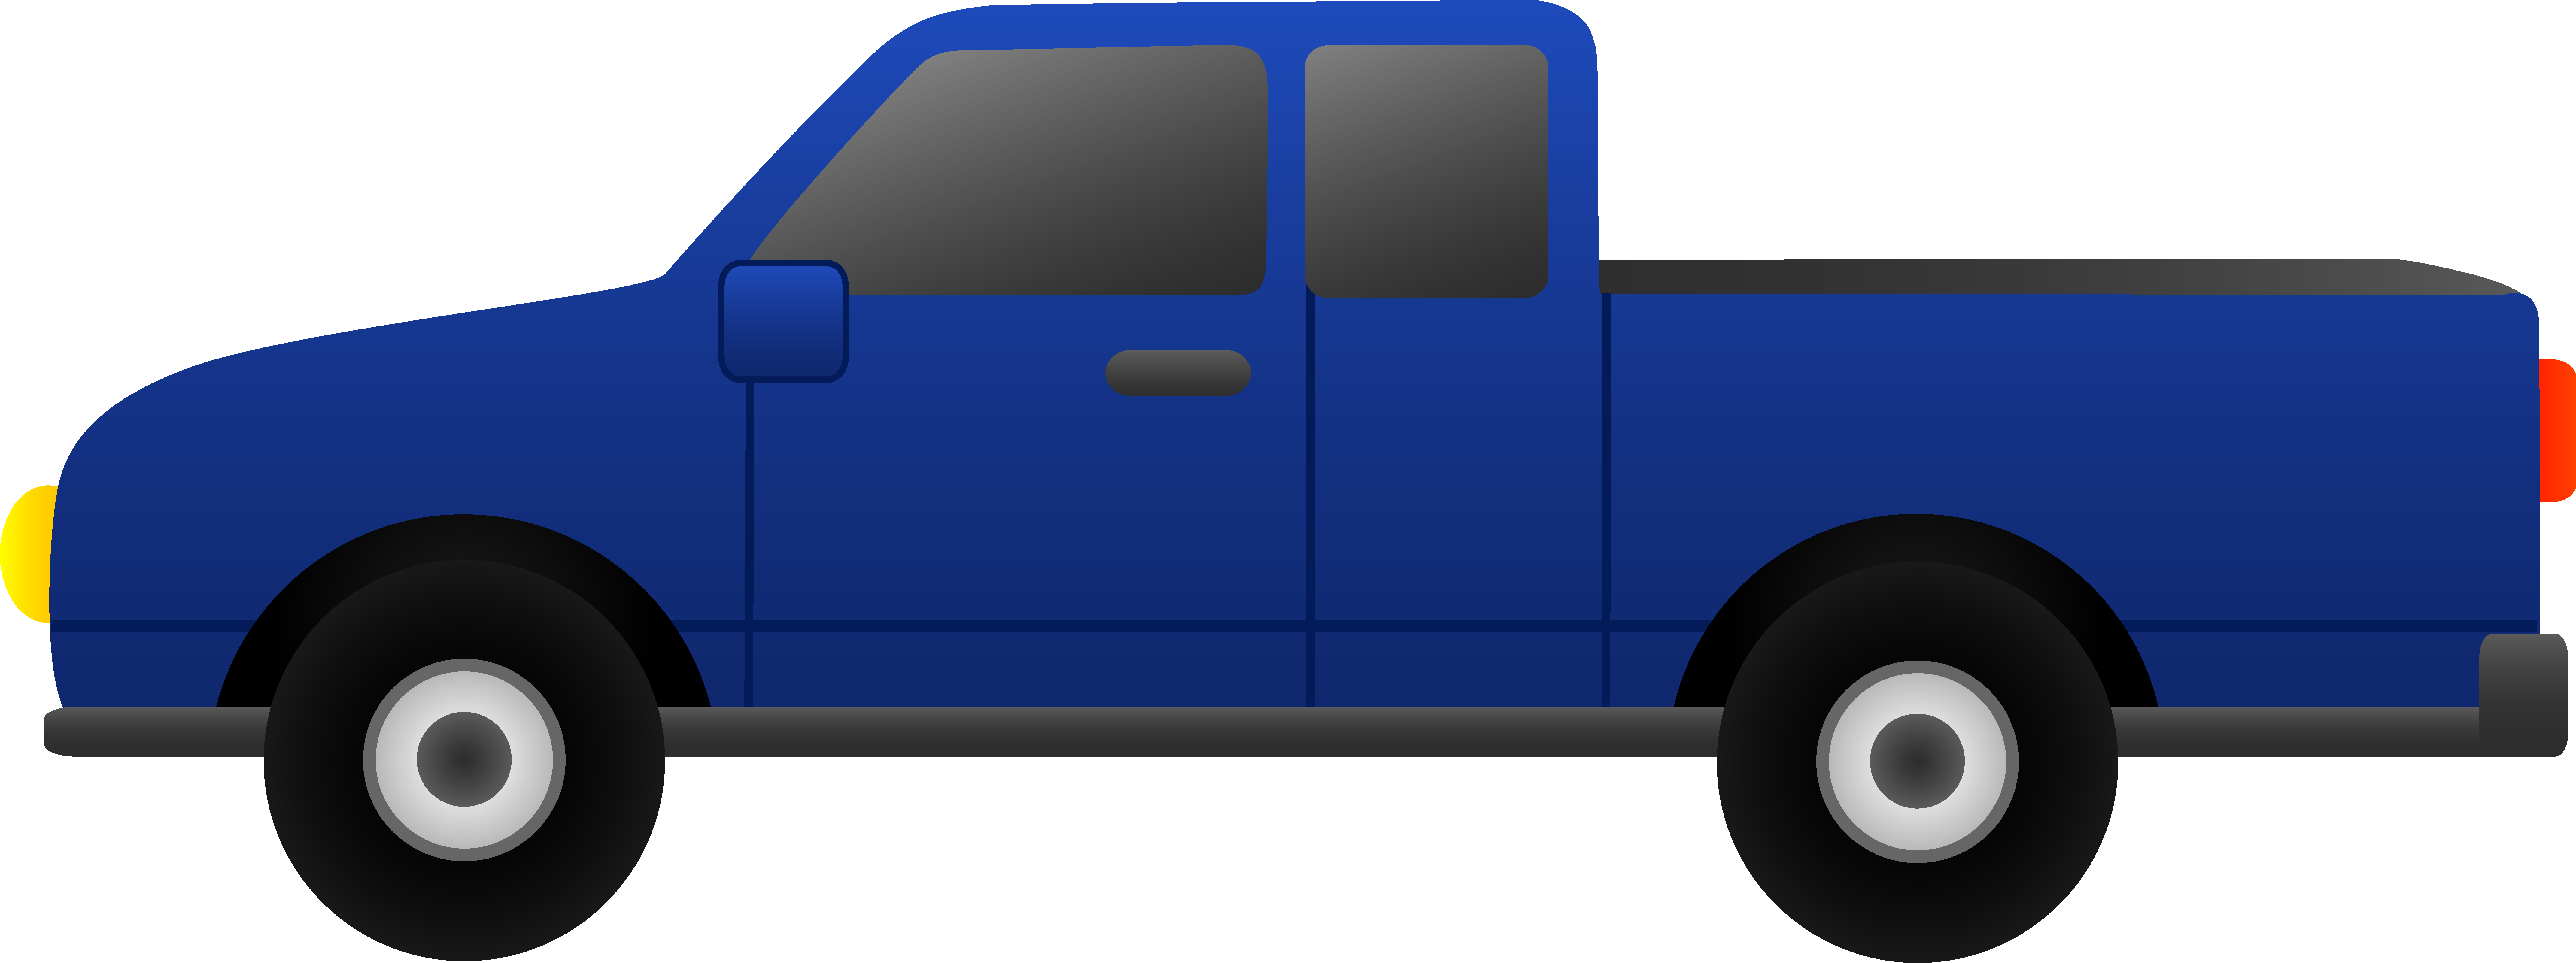 Blue Pickup Truck Clip Art - Free Clip Art